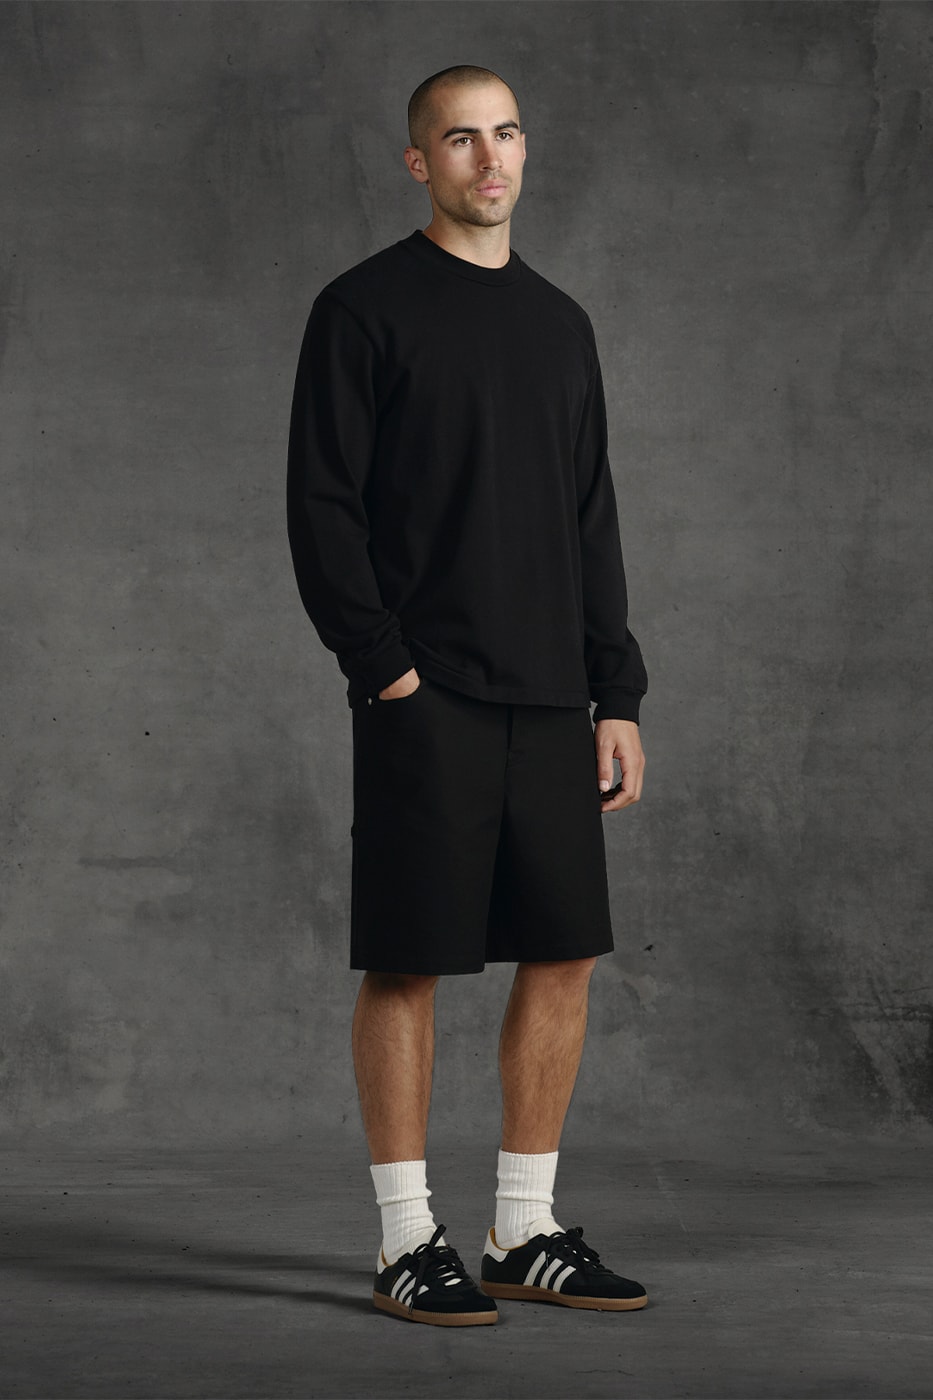 JJJJound Sticks To Monochromatic Black Premium Basics for Its Latest Spring 2024 Delivery release info clothes minimalistic functional subtle